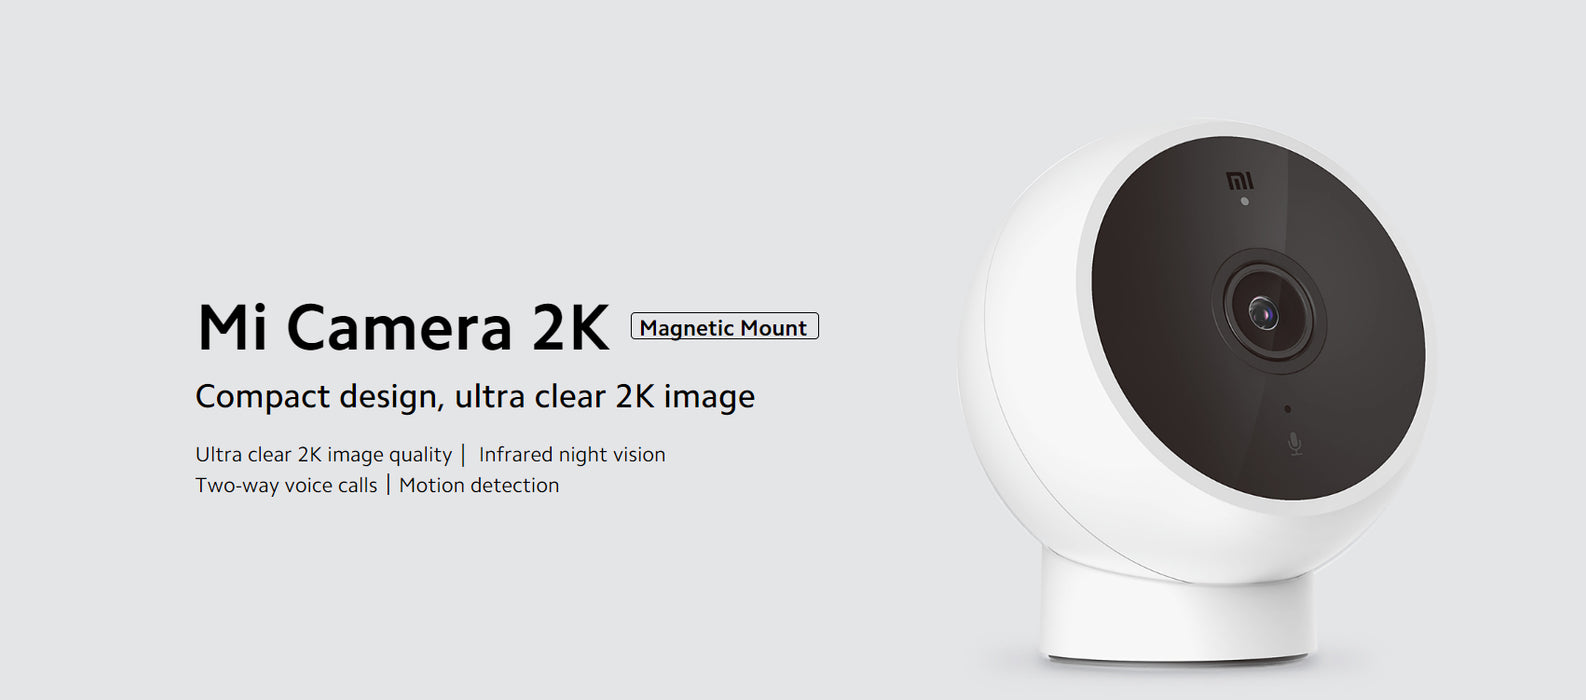 Xiaomi Mi Camera 2K (Magnetic Mount)